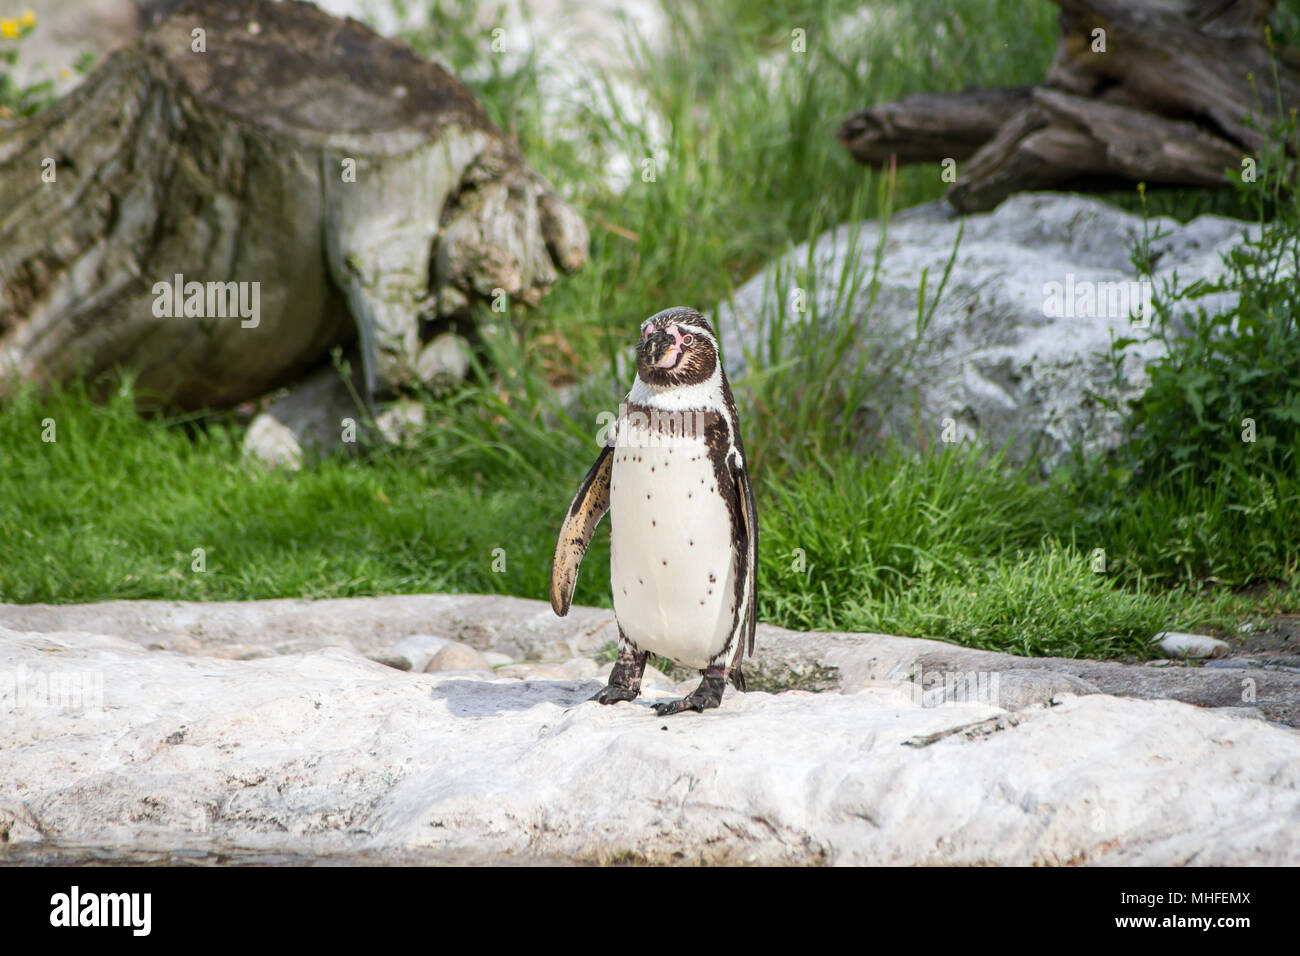 Blackfooted penguin (Spheniscus demersus) in a zoo Stock Photo